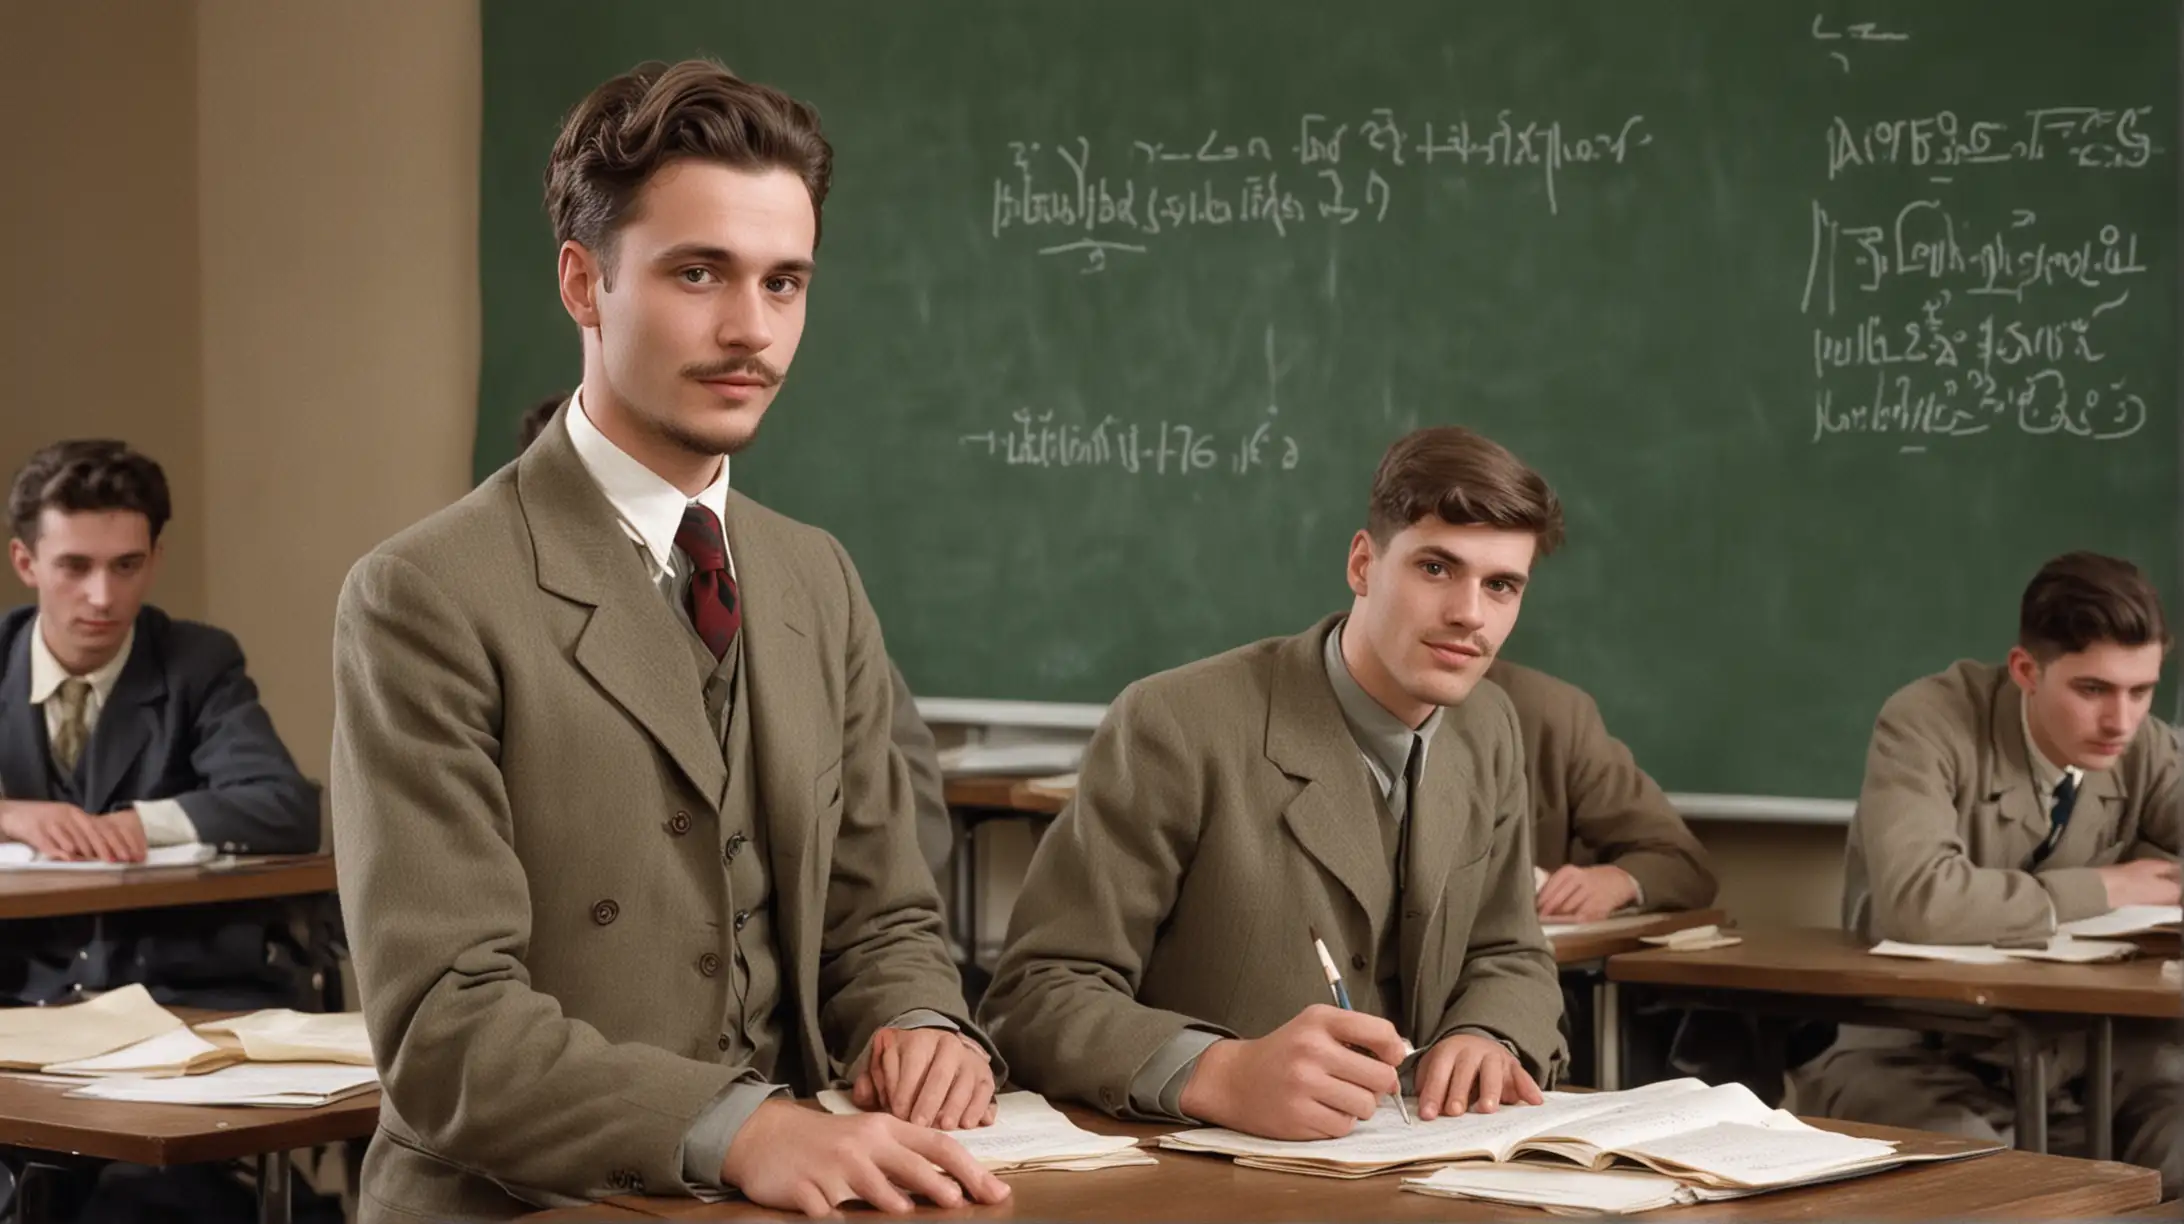 German Mathematician Teaching Class in Colorful 1945 University Setting